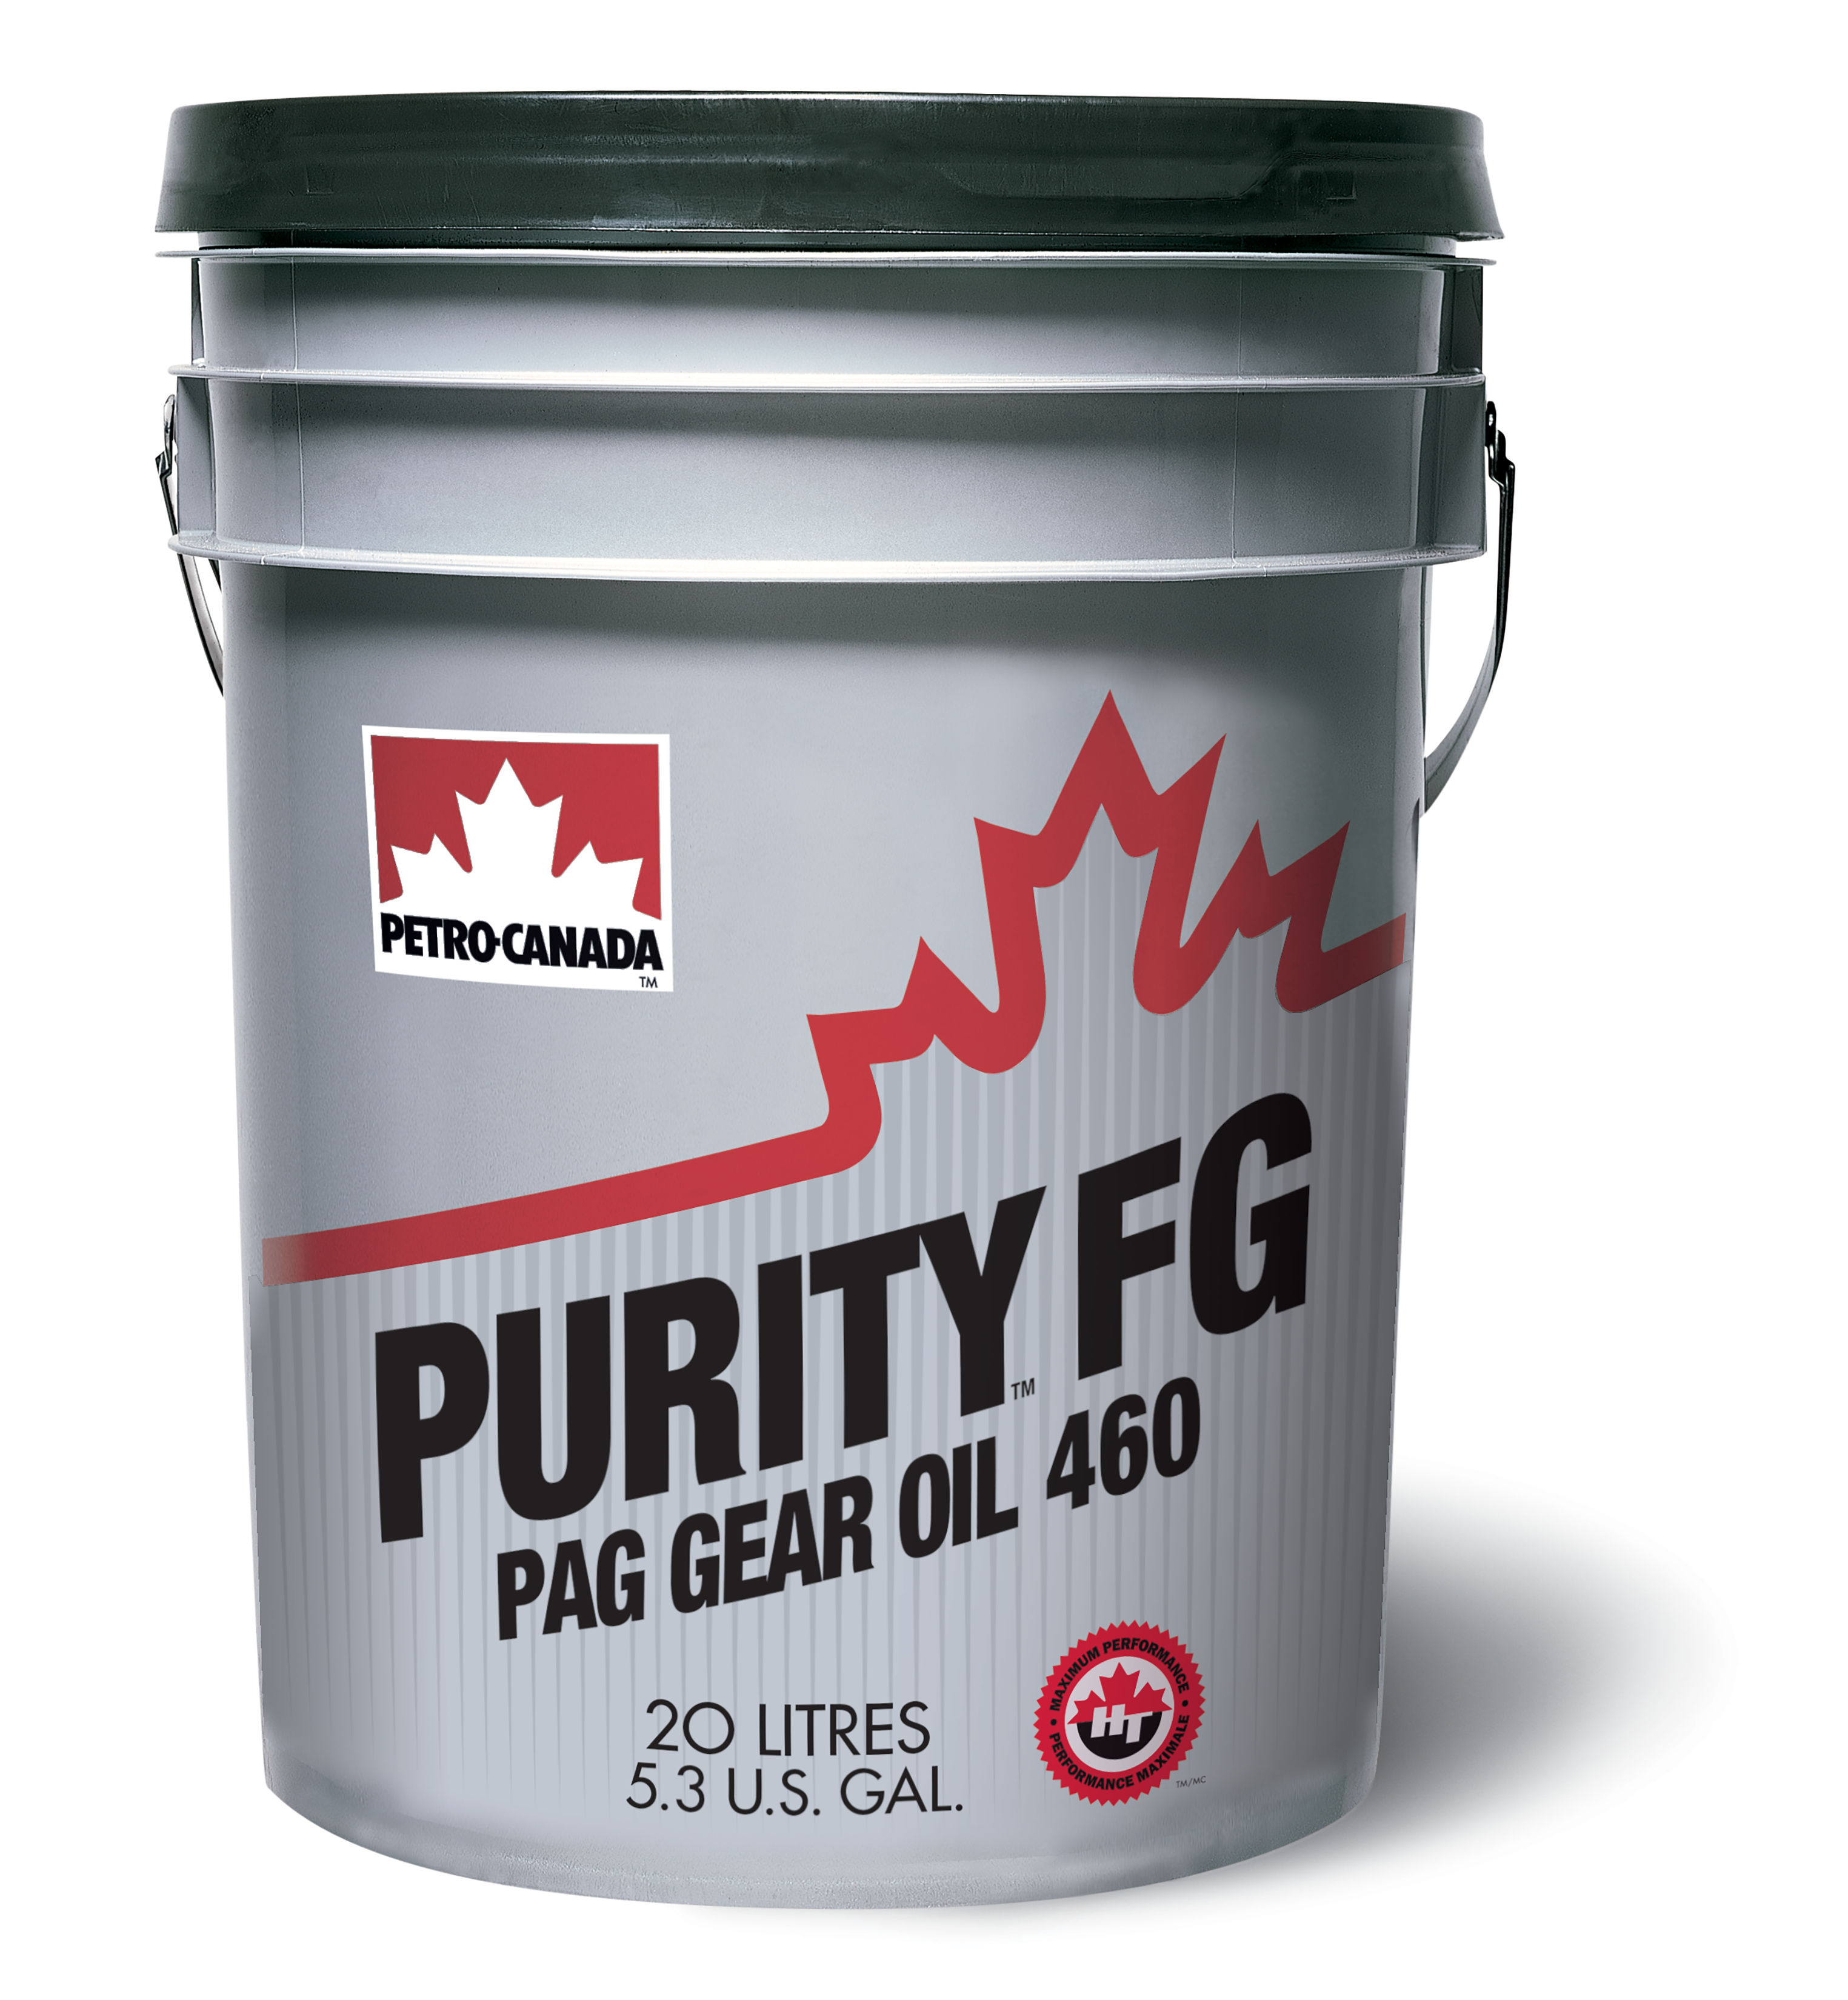 Petro-Canada Purity FG PAG Getriebeöl 460